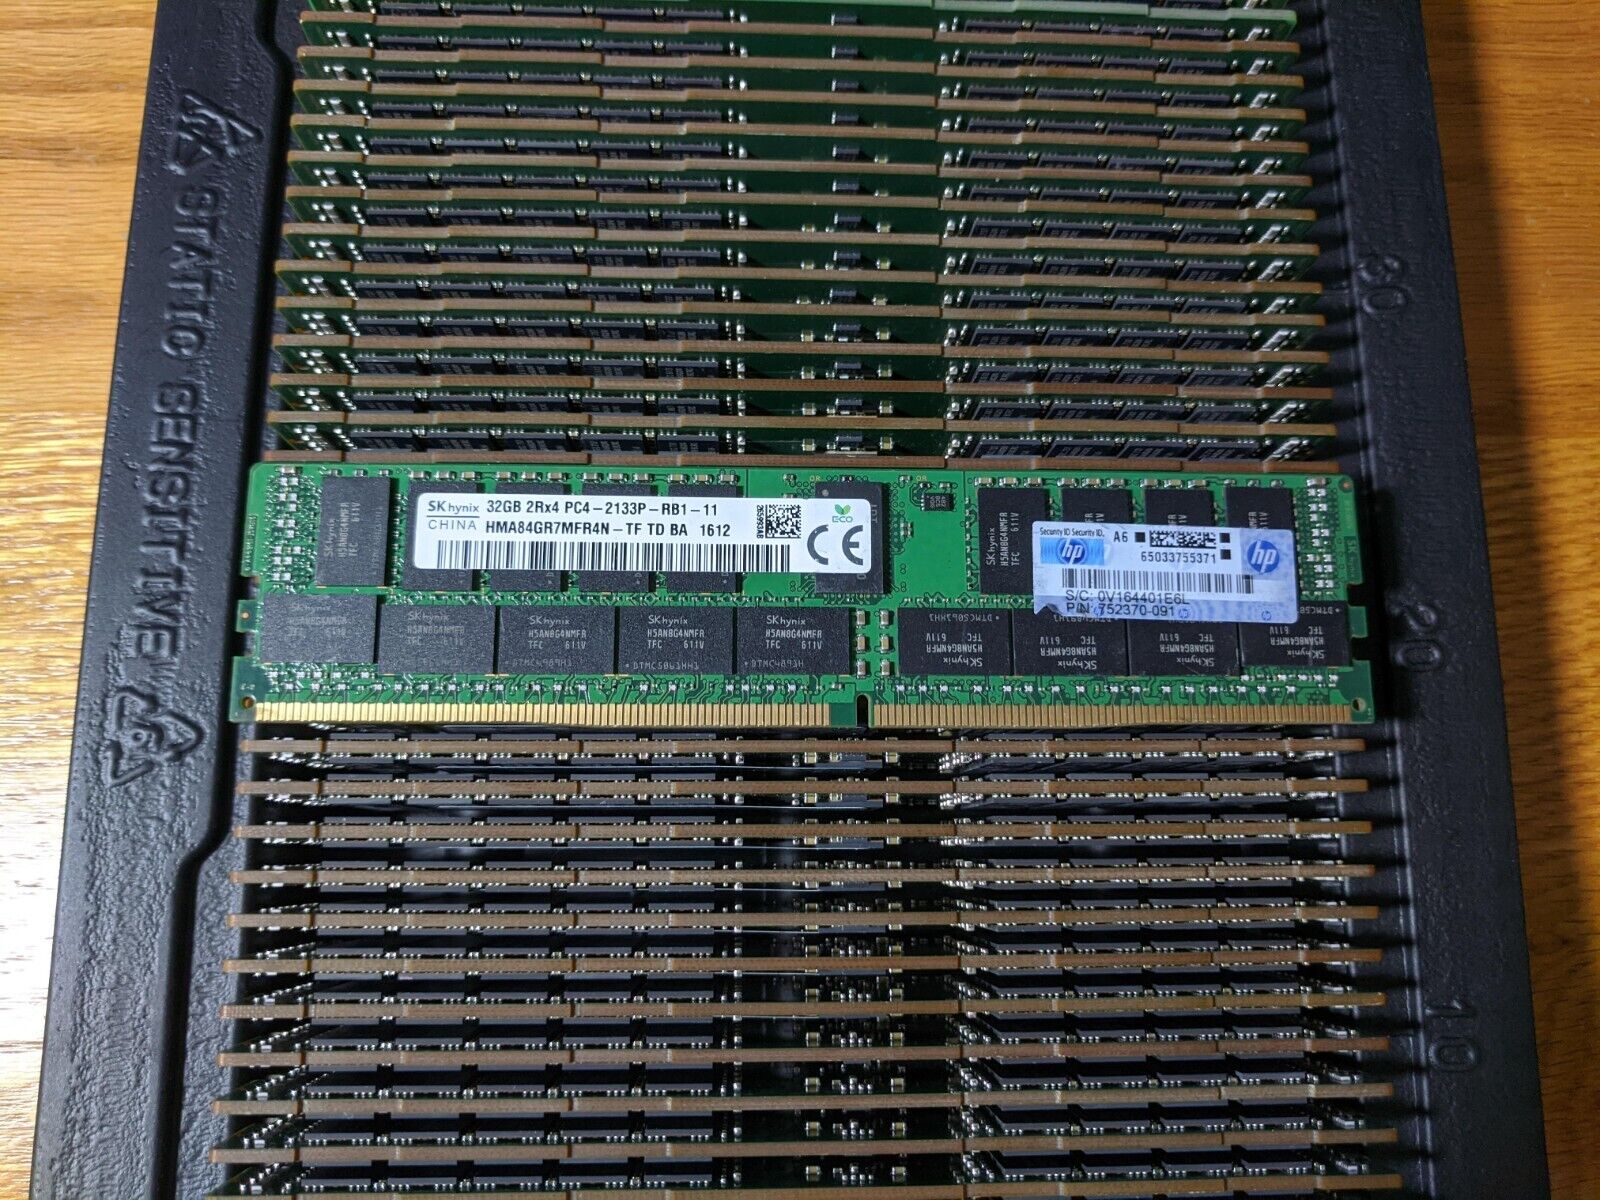 HPE 32gb PC4-2133P 2Rx4 DDR4 ECC RDIMM Memory 752370-091 HMA84GR7MFR4N-TF